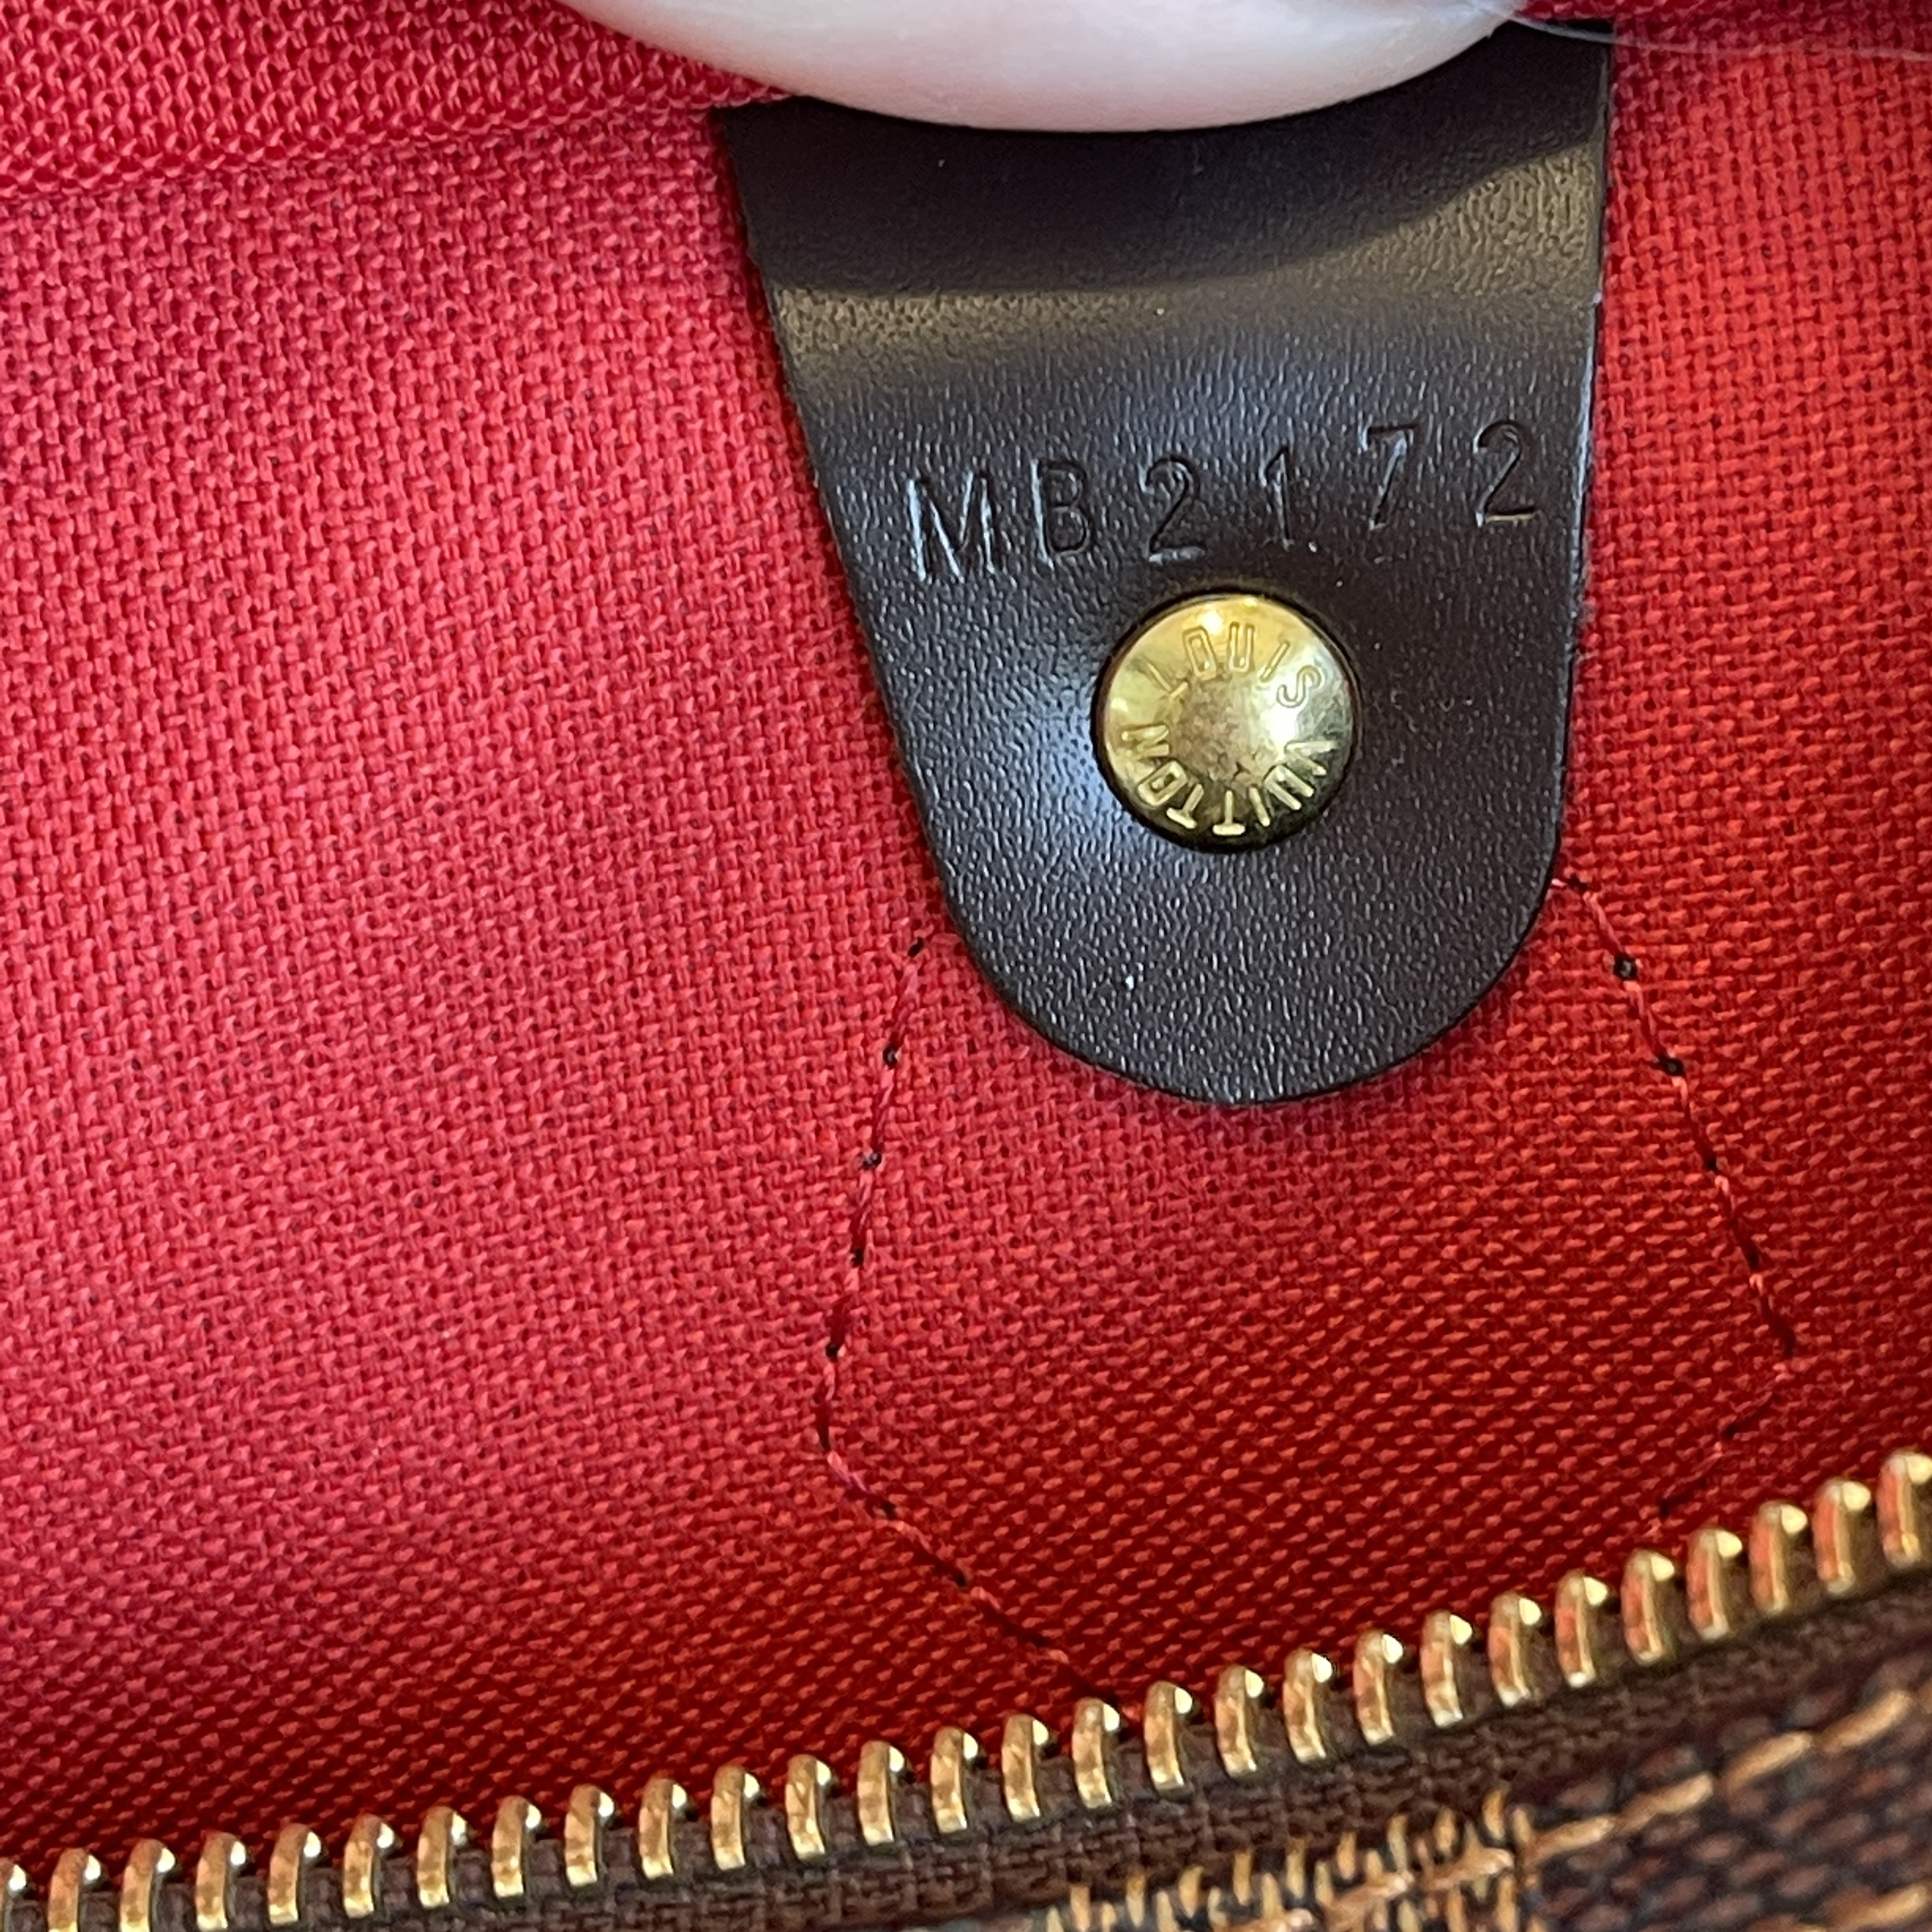 Your perfect everyday bag 👜 The Louis Vuitton Damier Ebene Speedy